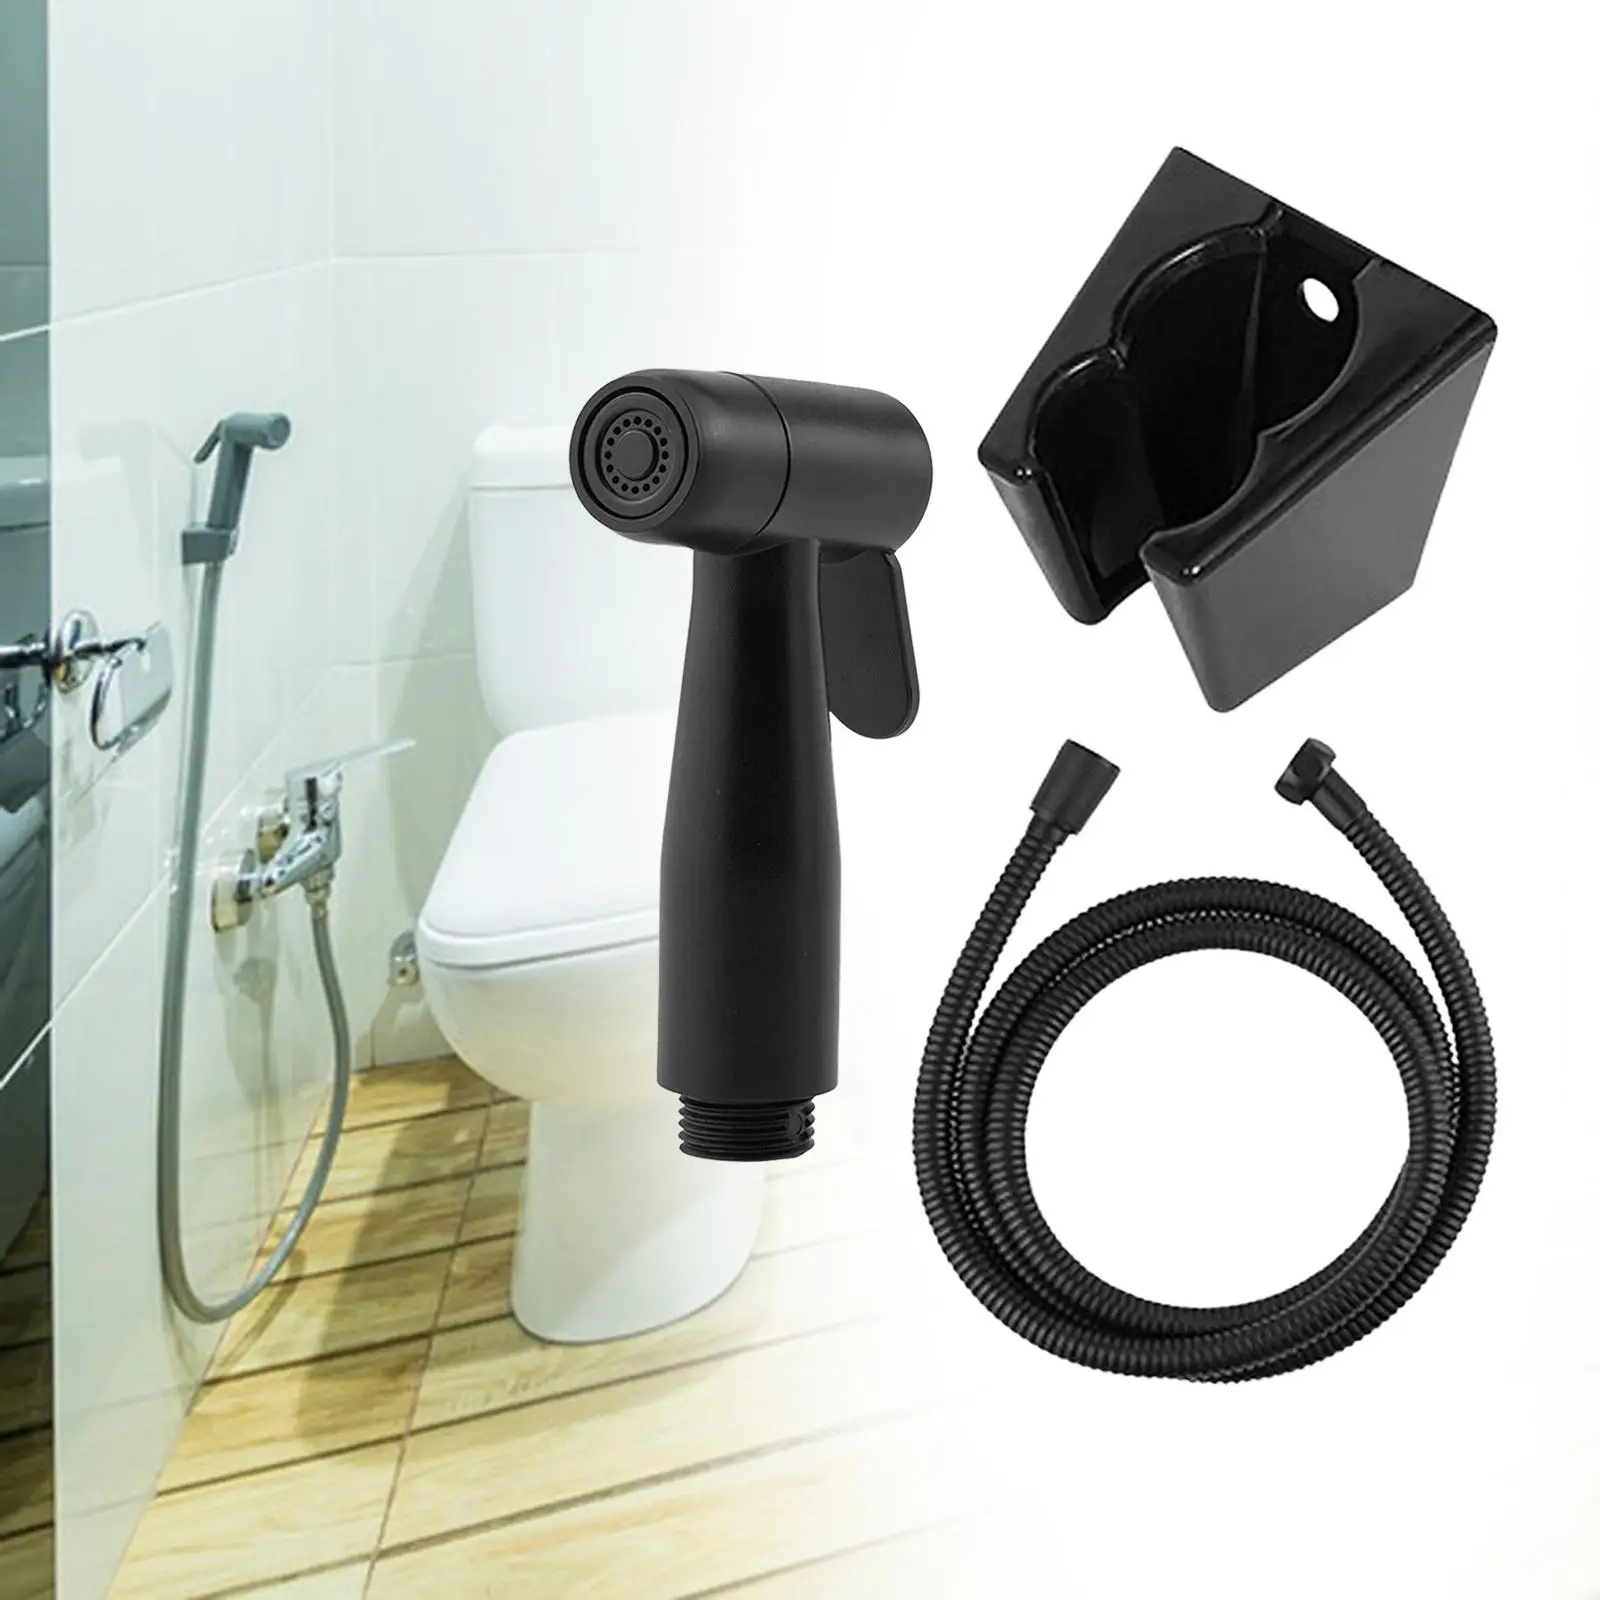 Bidet Toilet Sprayer Set Shower Head with Hose and Wall Bracket Holder for Toilet Flushing Floor Cleaning Kitchen Washroom